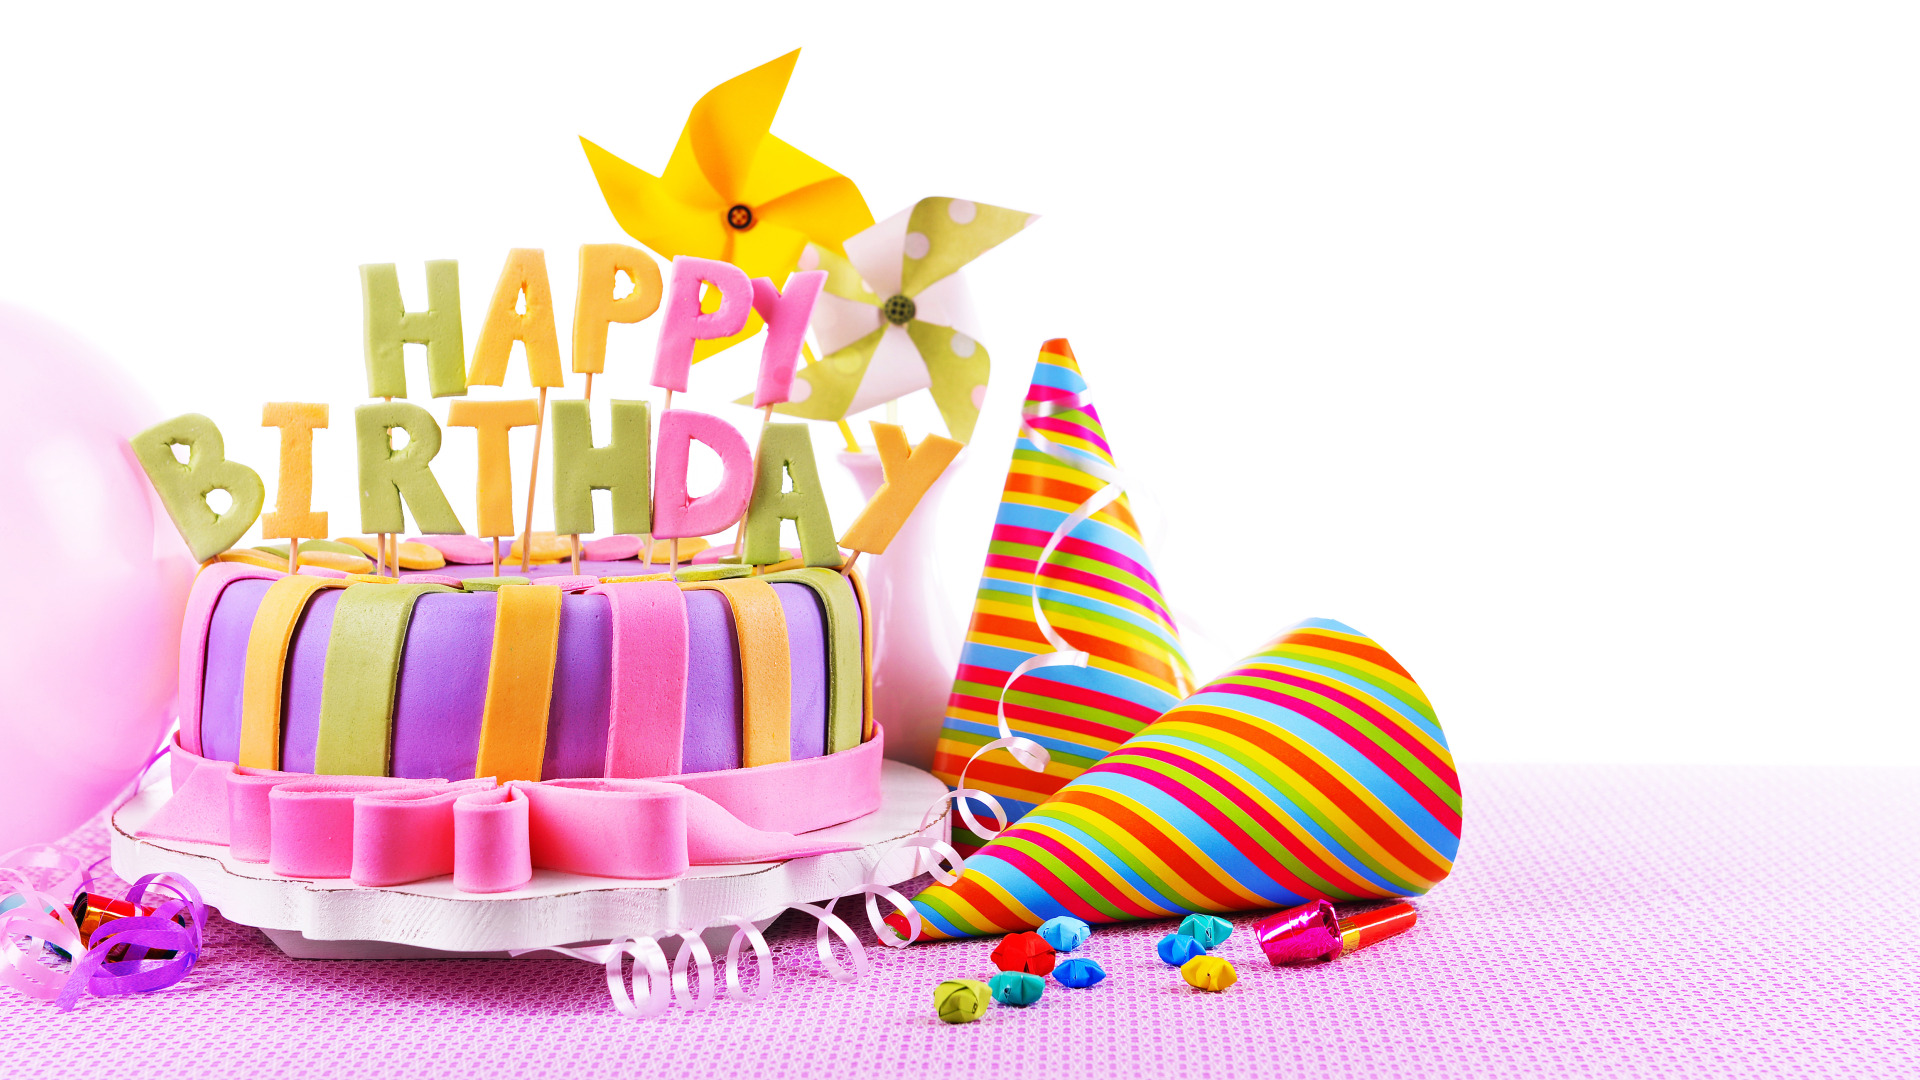 Happy birthday shruti cake images - 🧡 Открытка Торт на день рождения - кар...